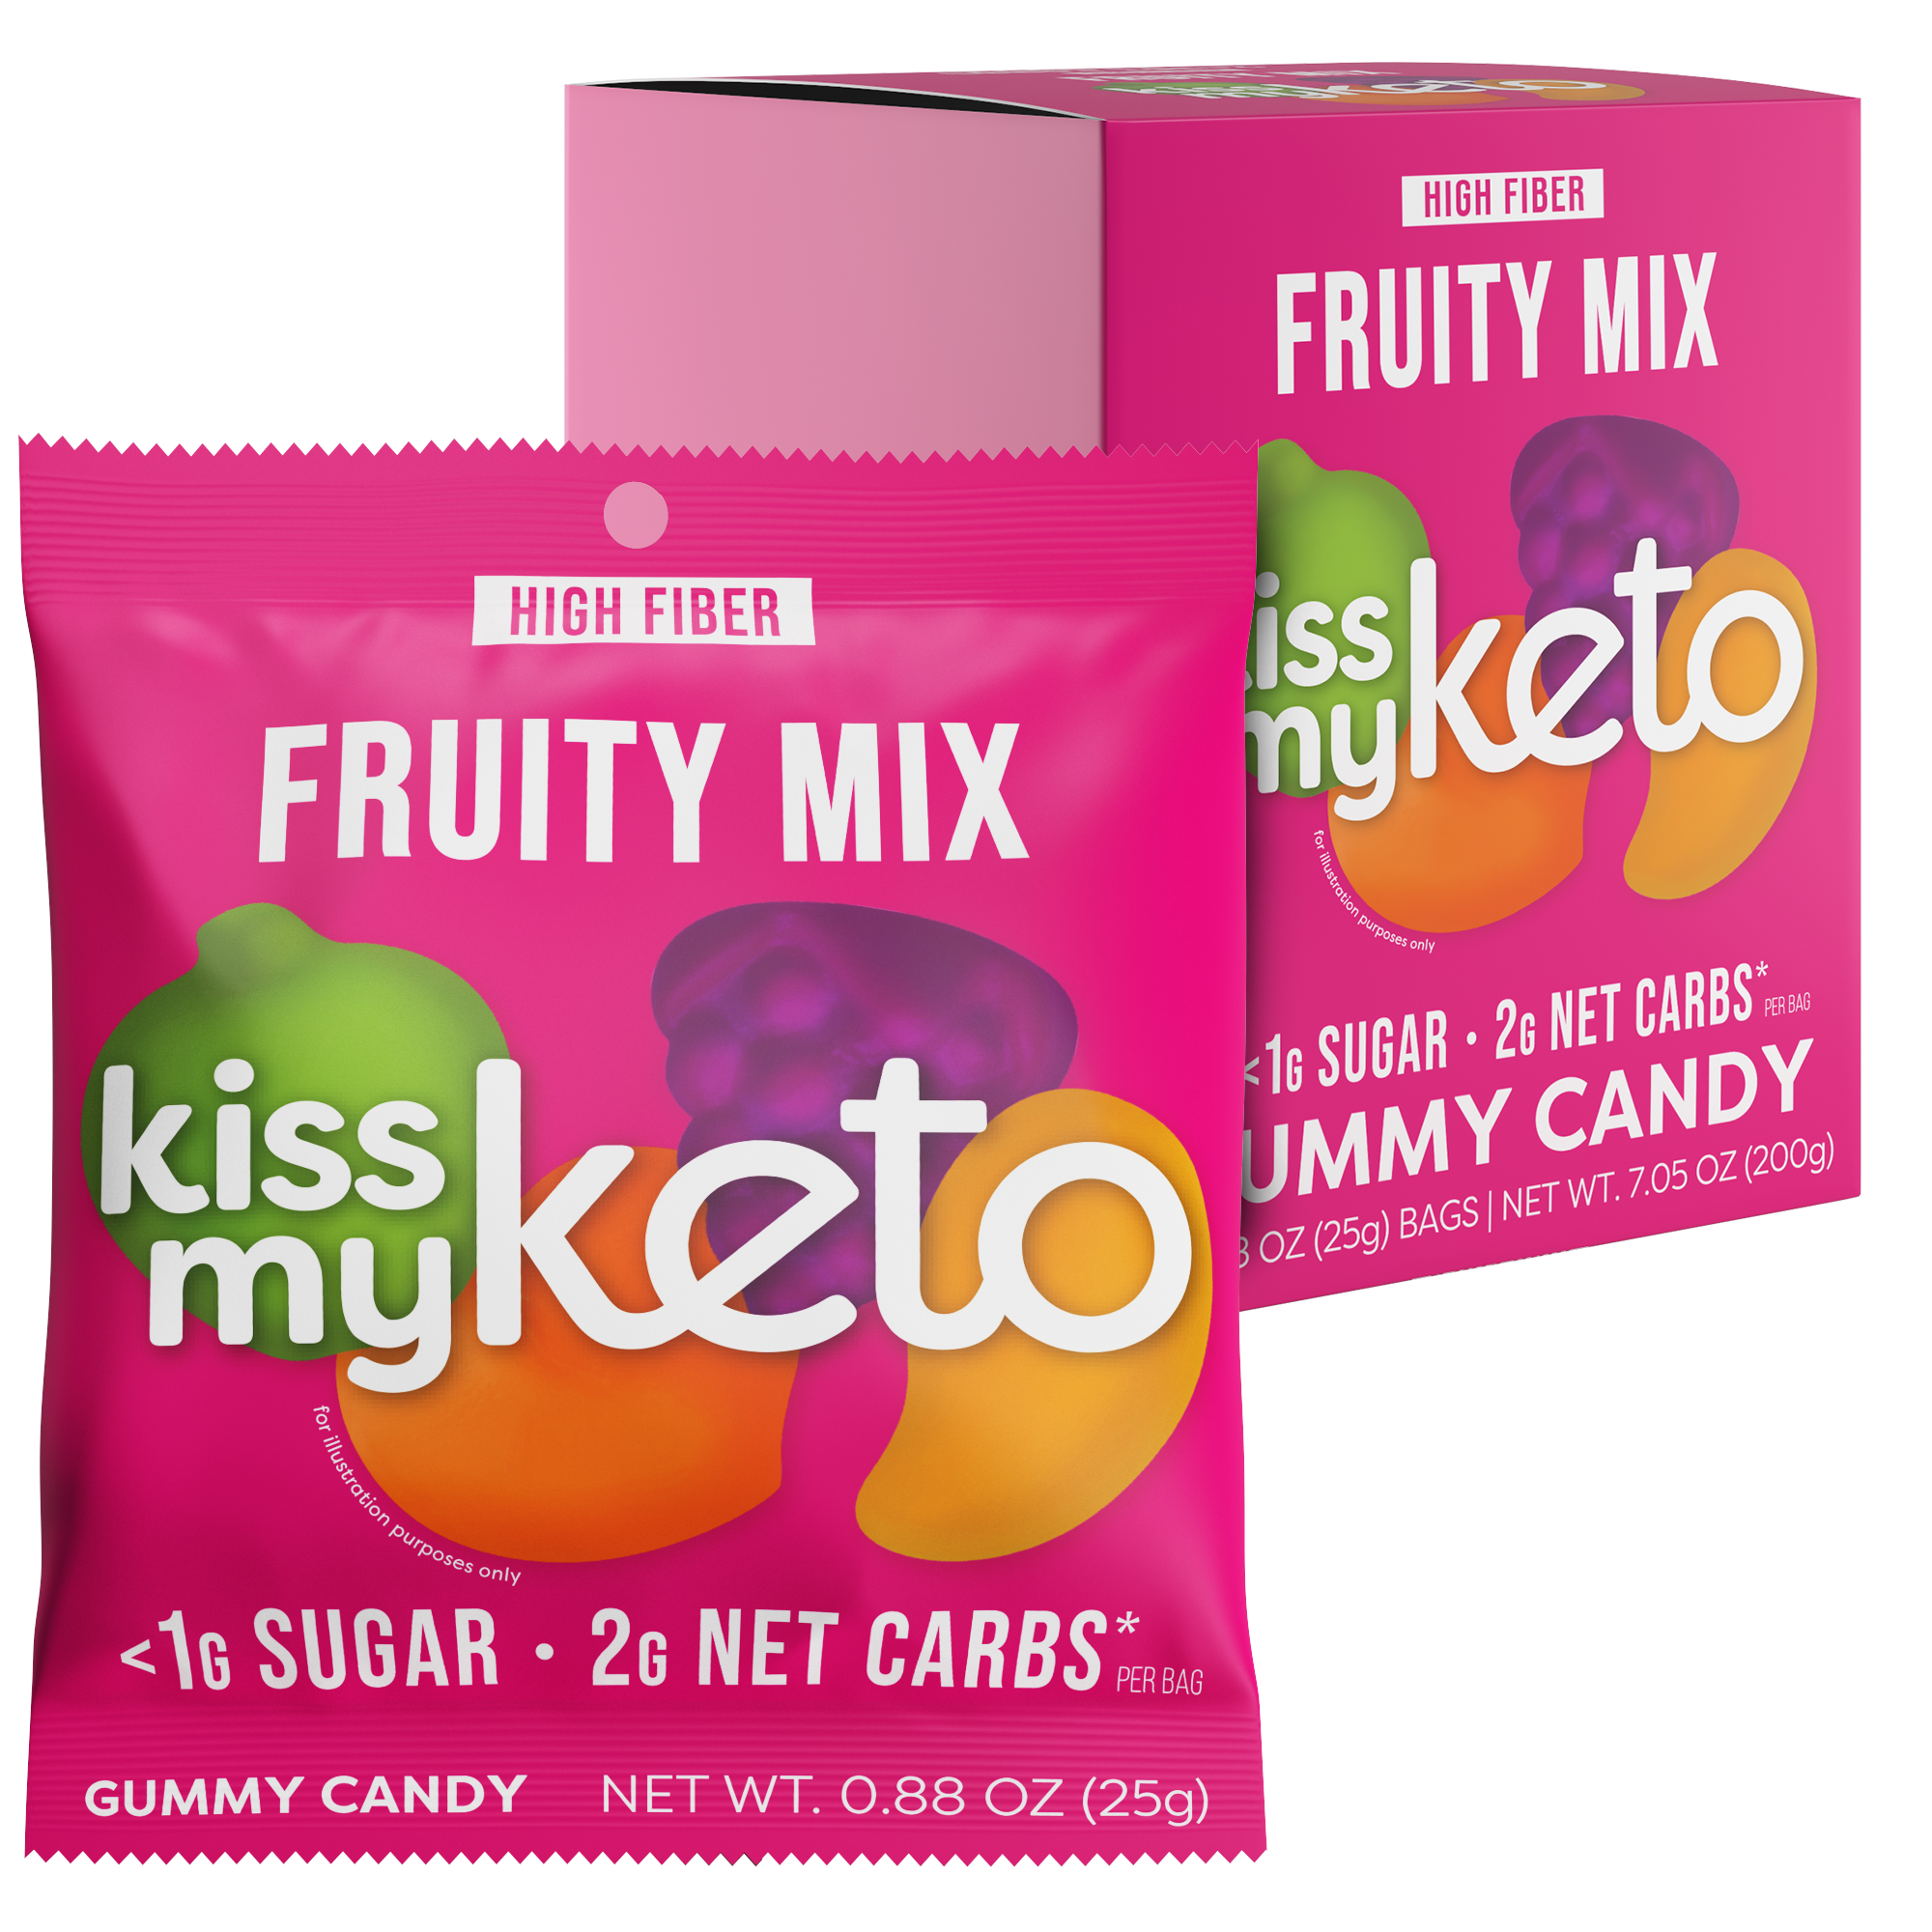 Keto Gummies, Grab These Fruity & High-Fiber Gummy Bears